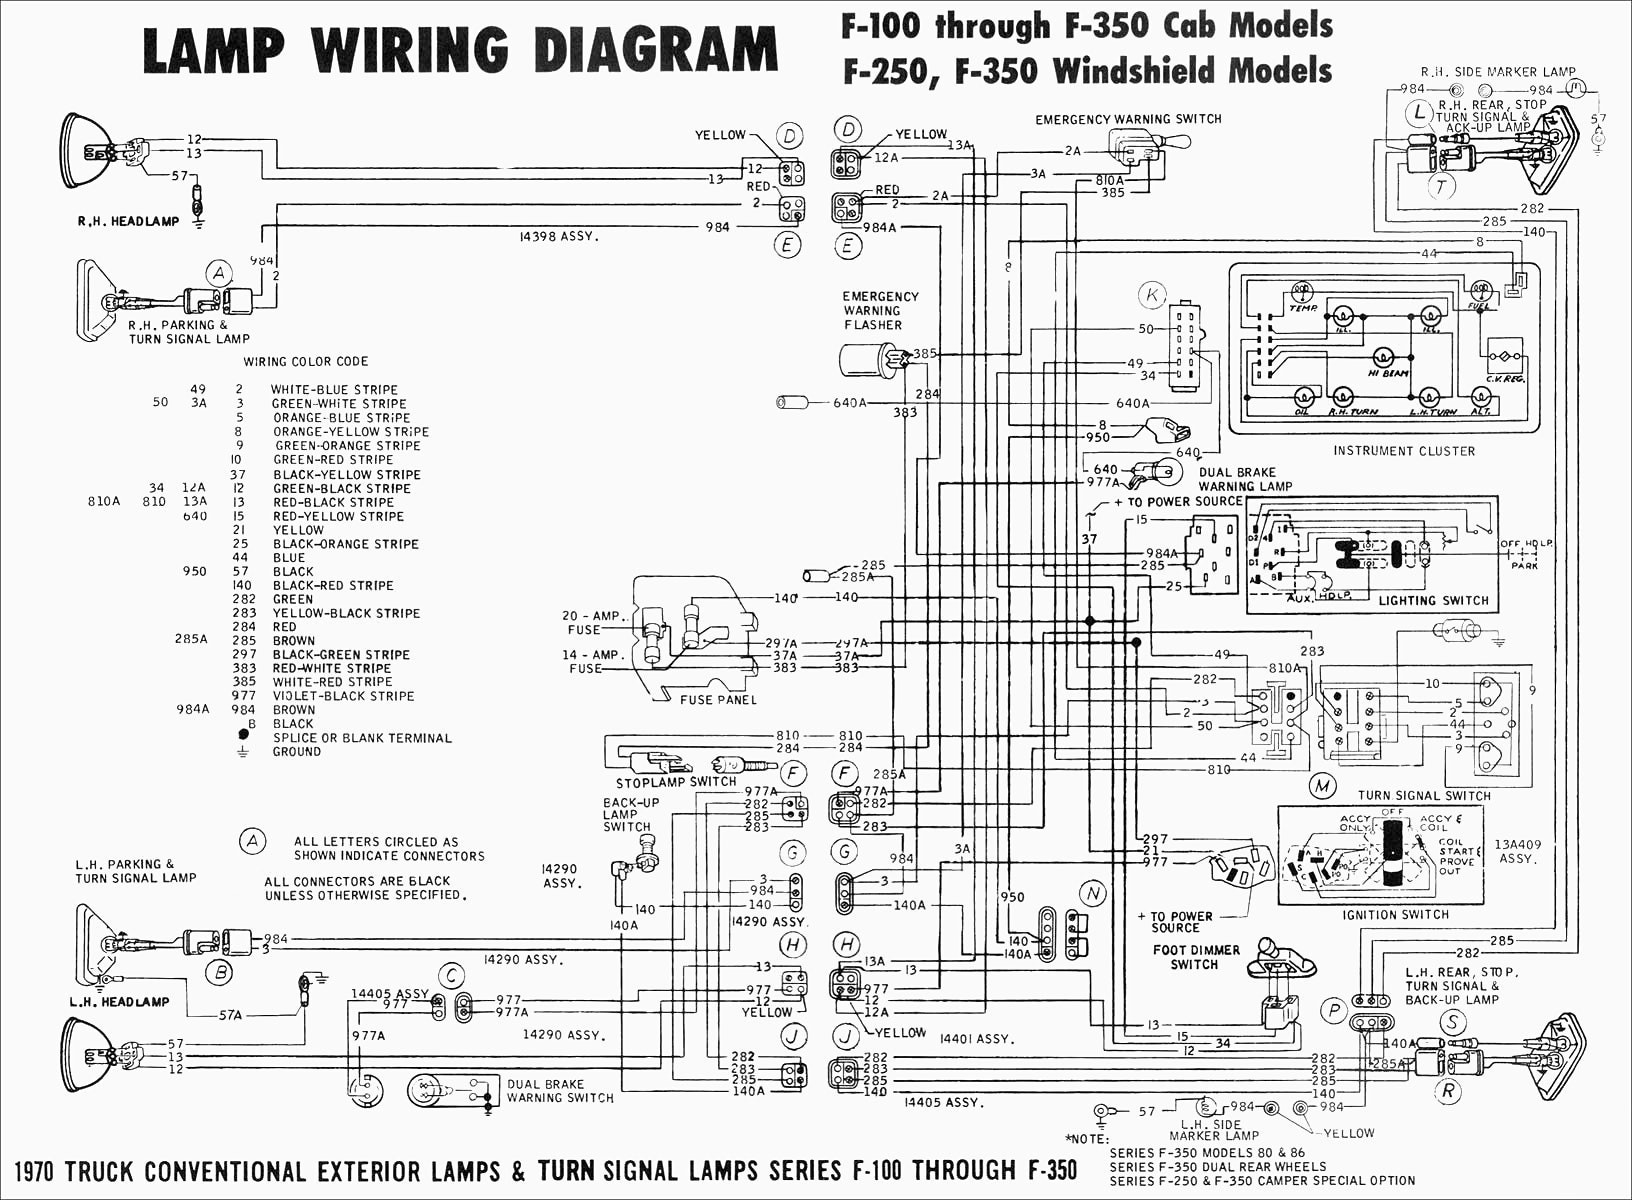 thesamba type 2 wiring diagrams rh yesonm info Relay Switch Wiring Diagram 2 Gang Switch Wiring